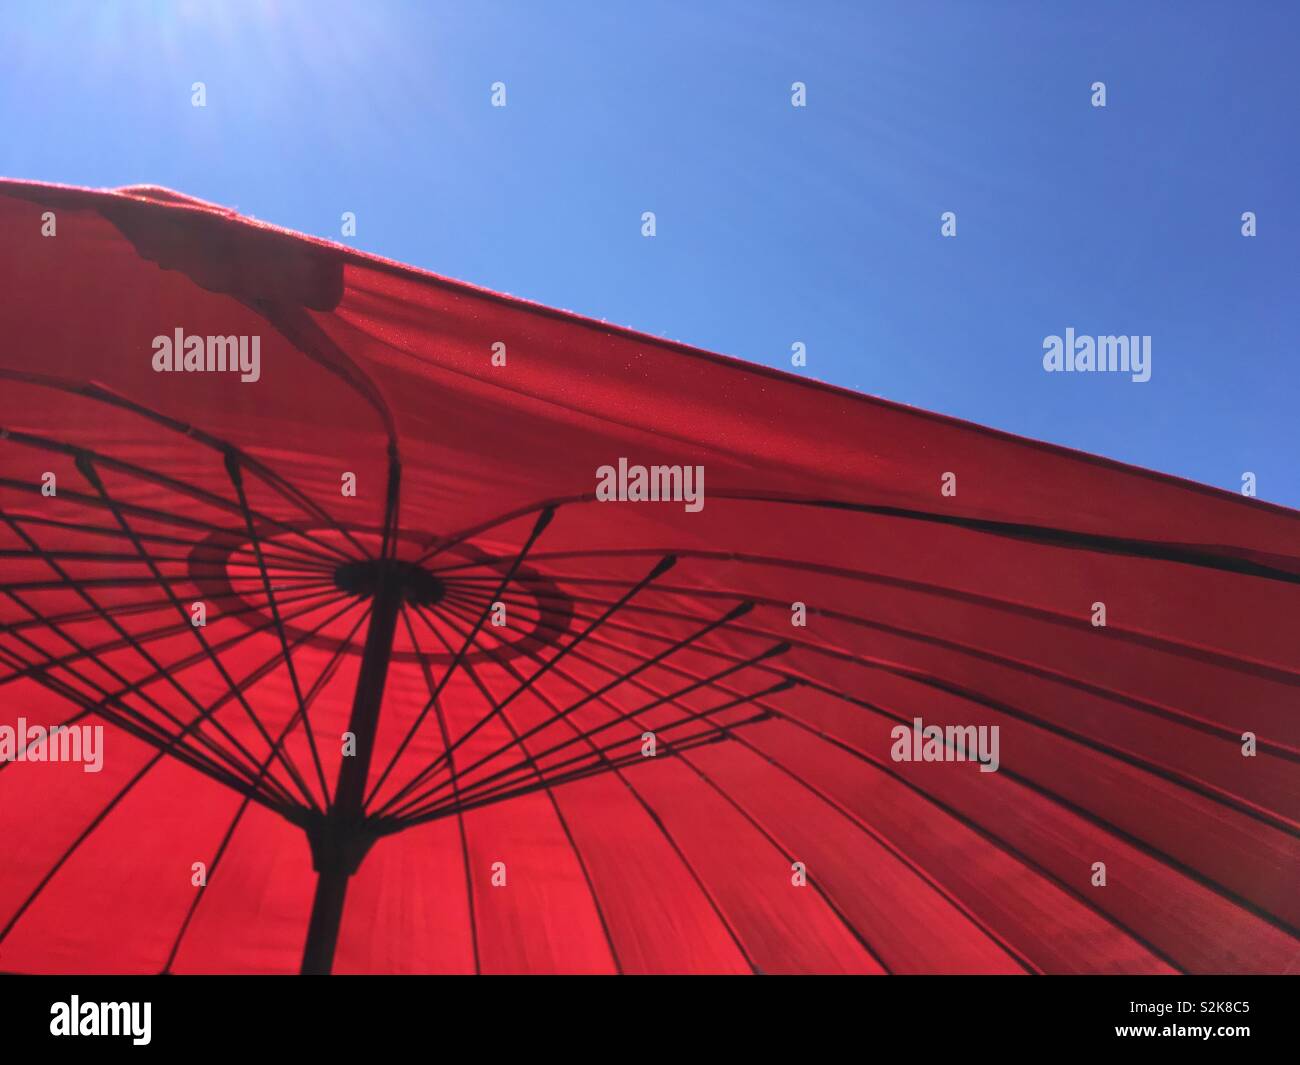 A red umbrella against a blue sky Stock Photo